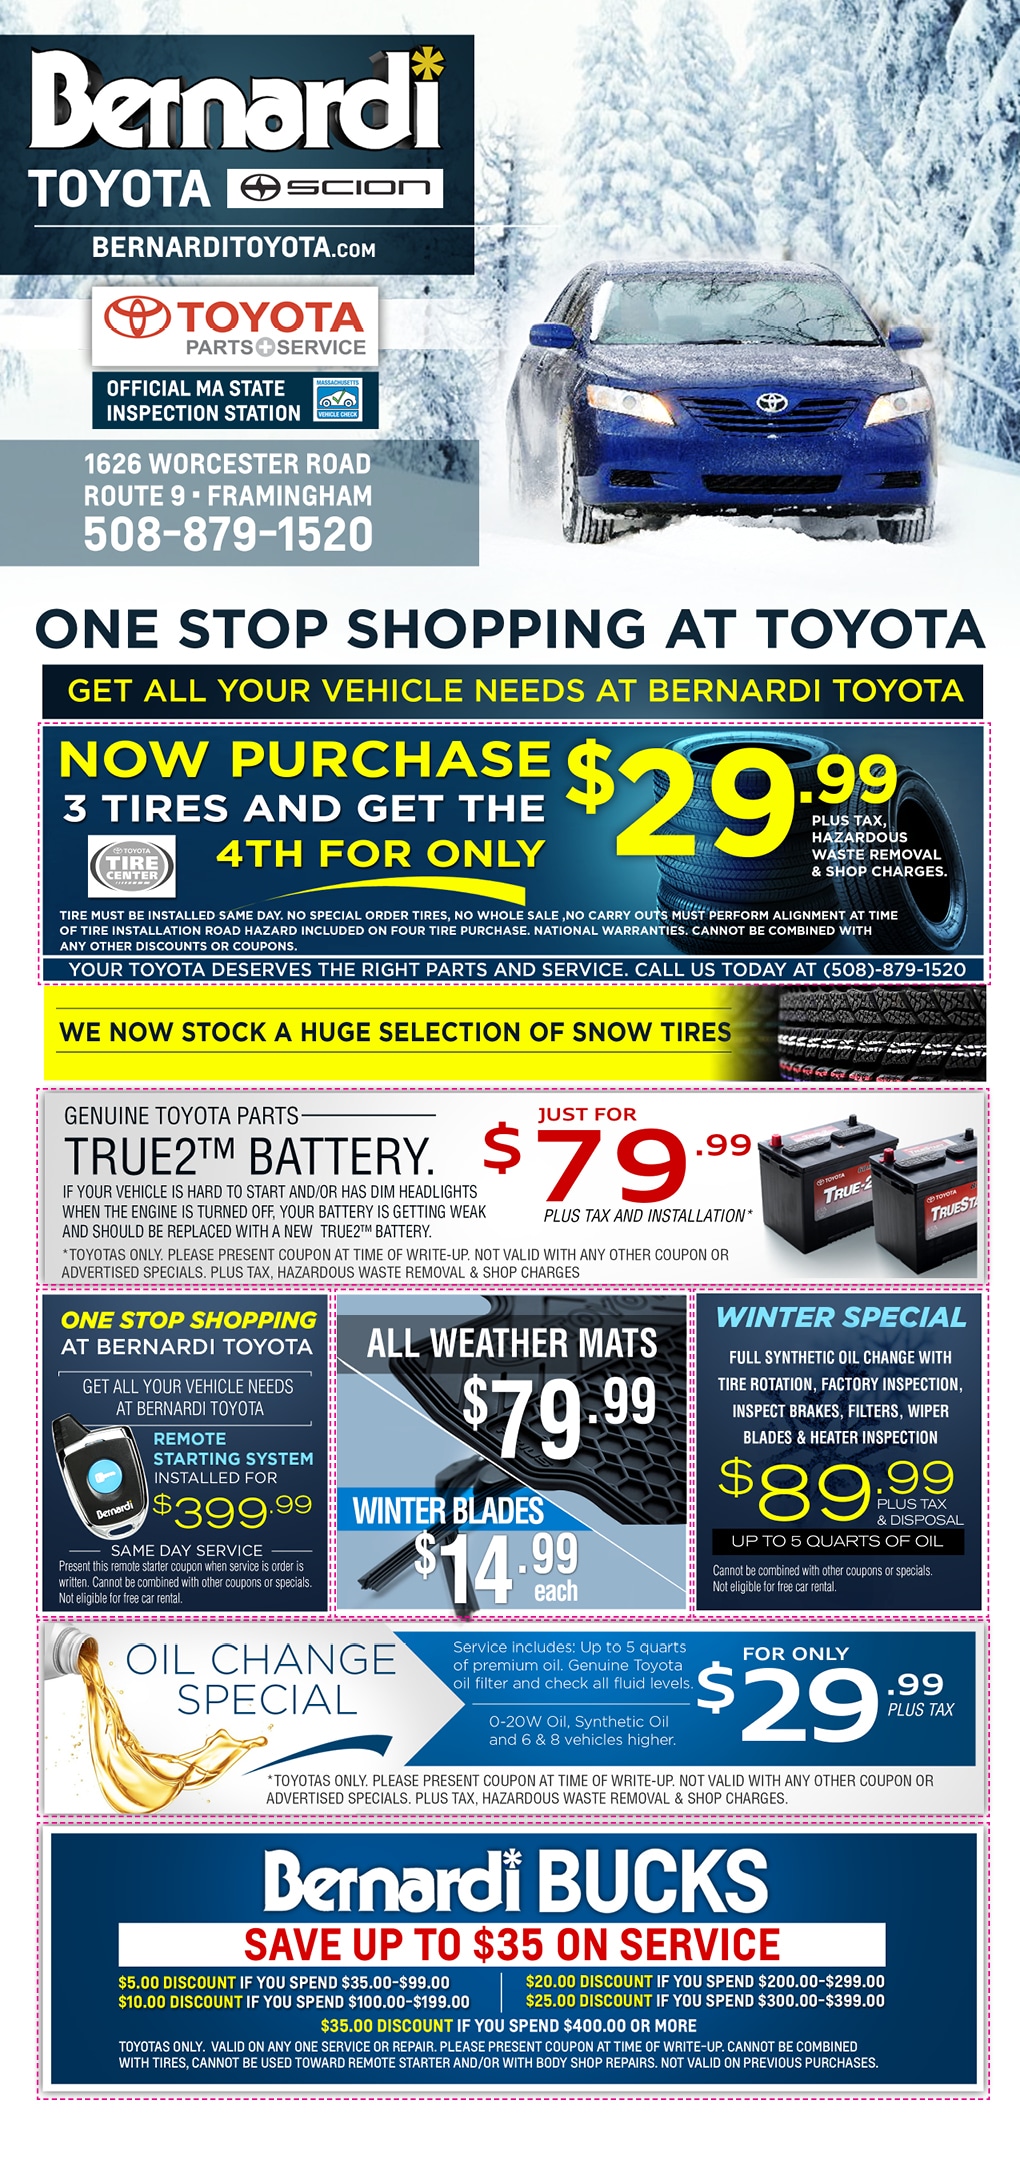 Toyota service coupons houston